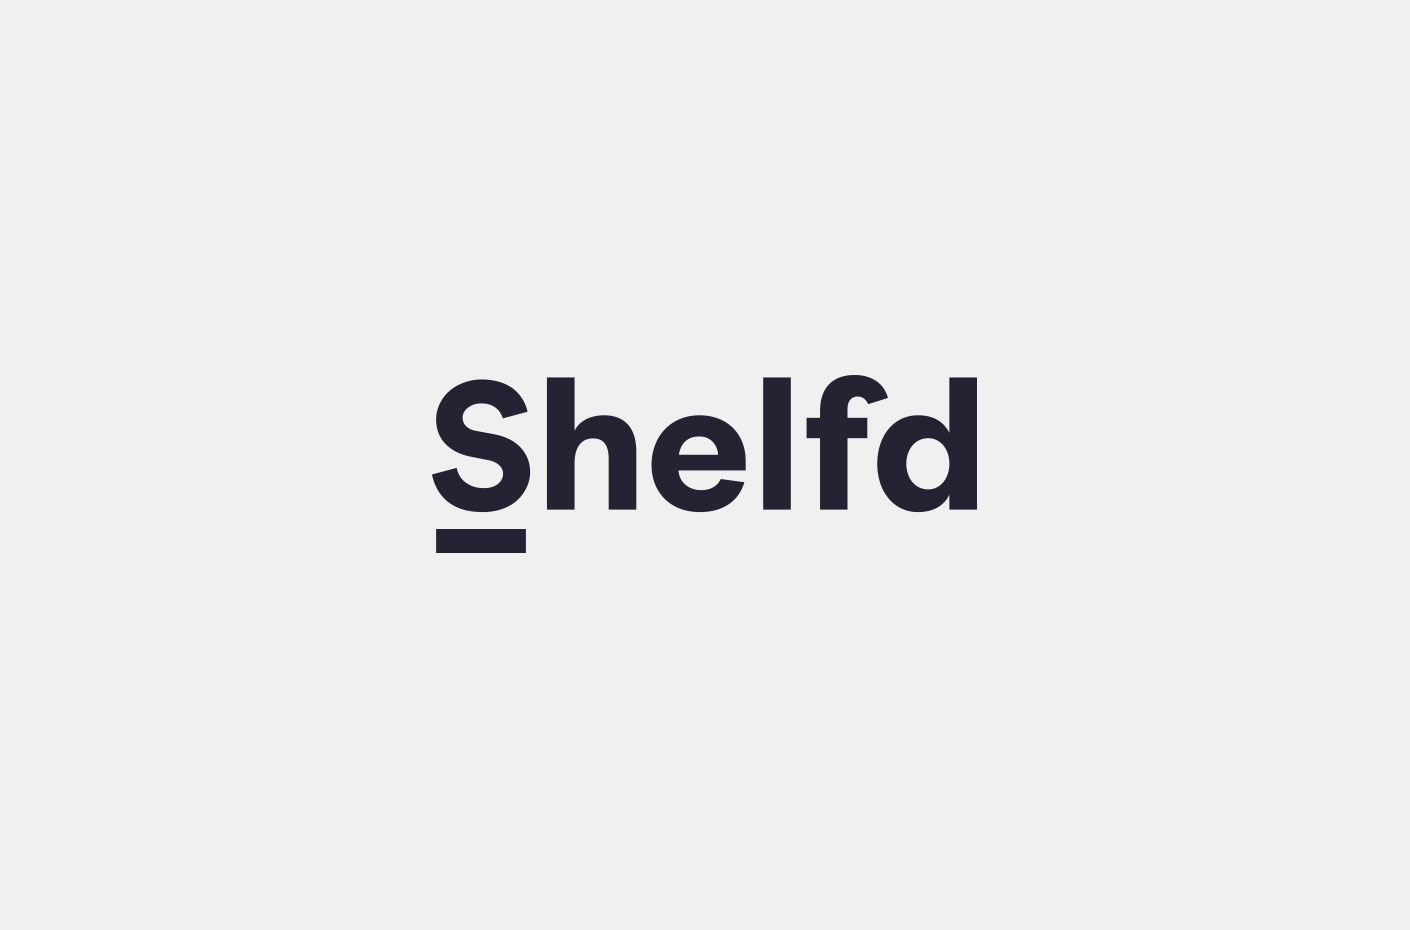 Shelfd ()